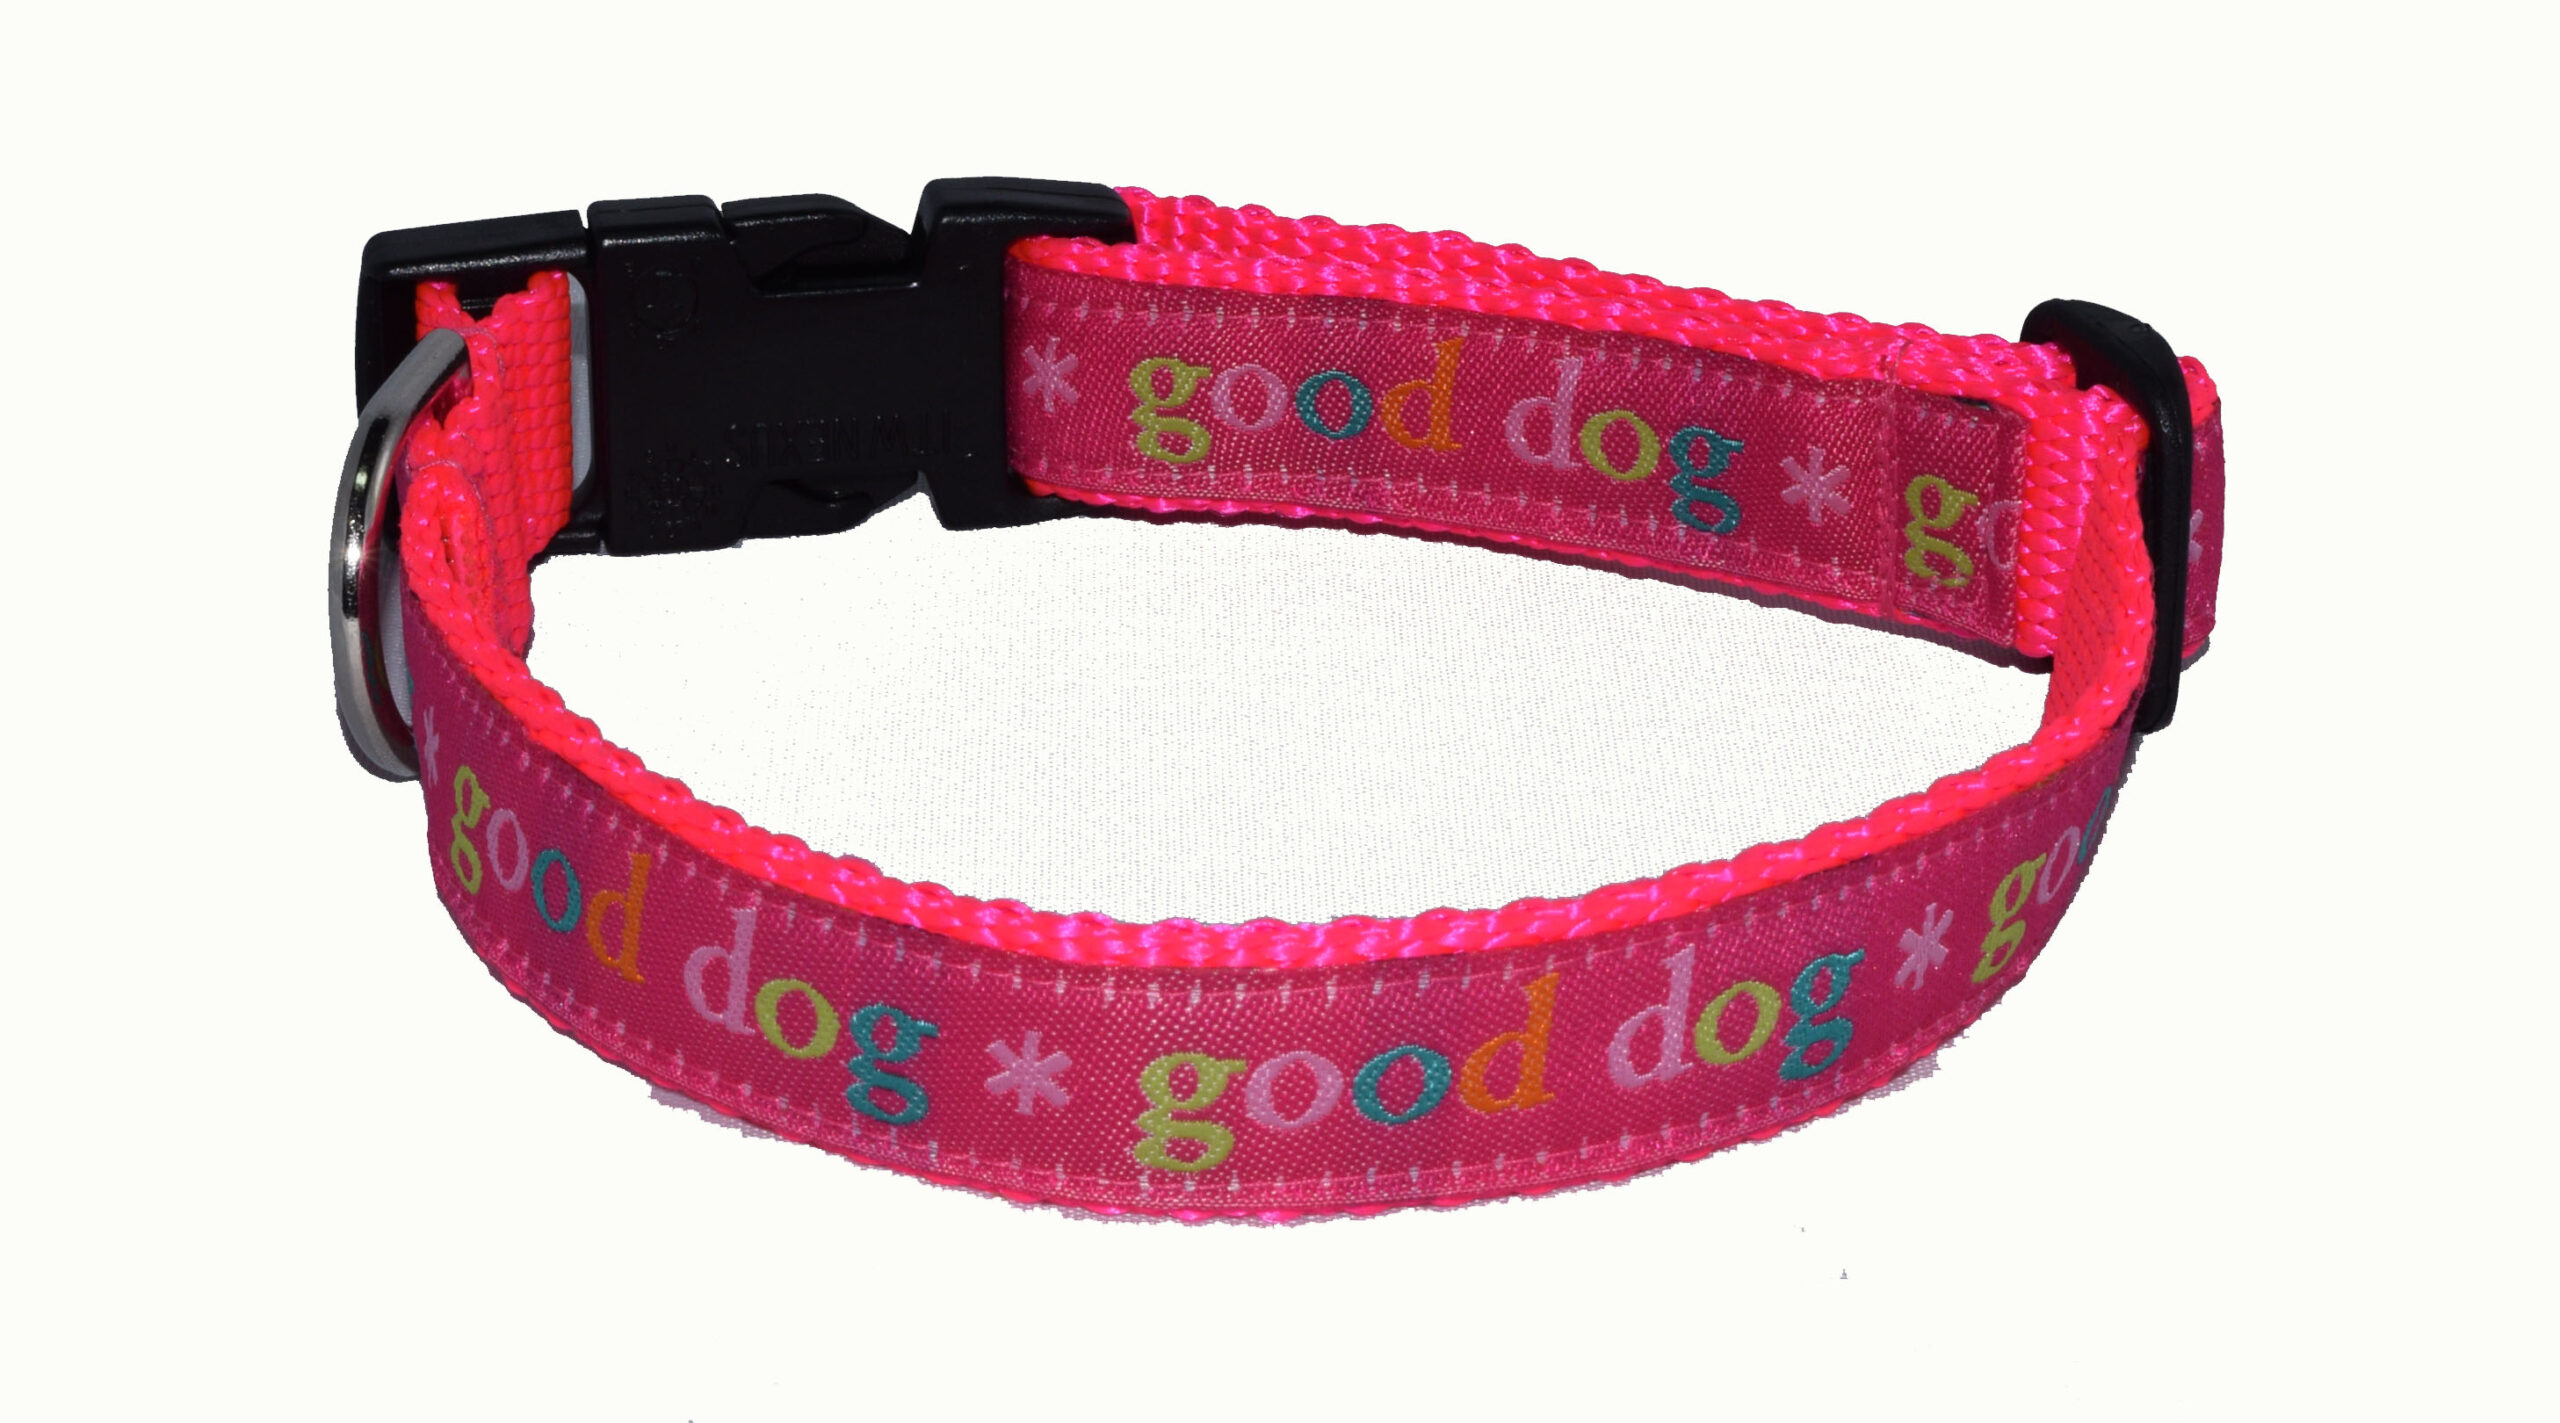 Good dog Pink Wholesale Dog Collar